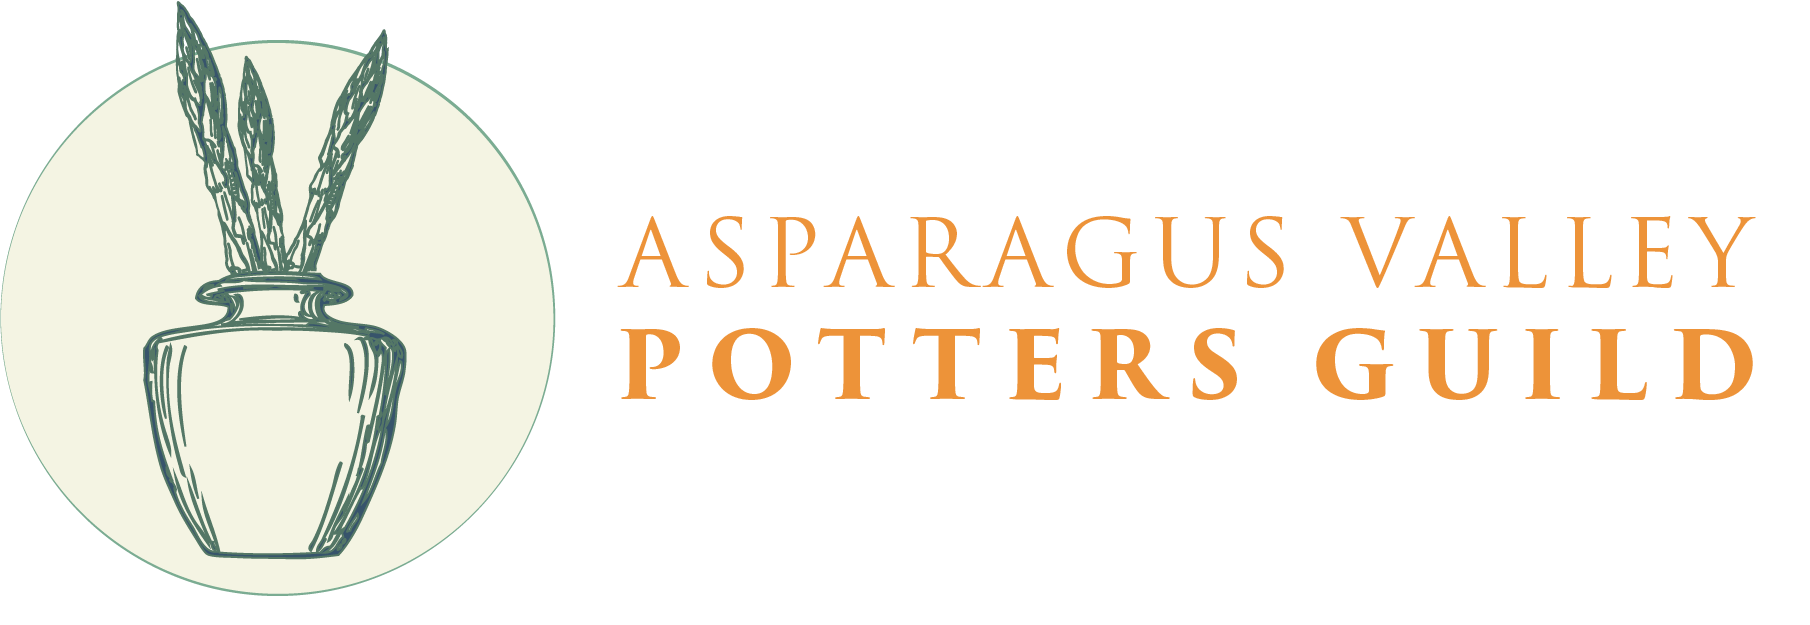 Asparagus Valley Potters Guild